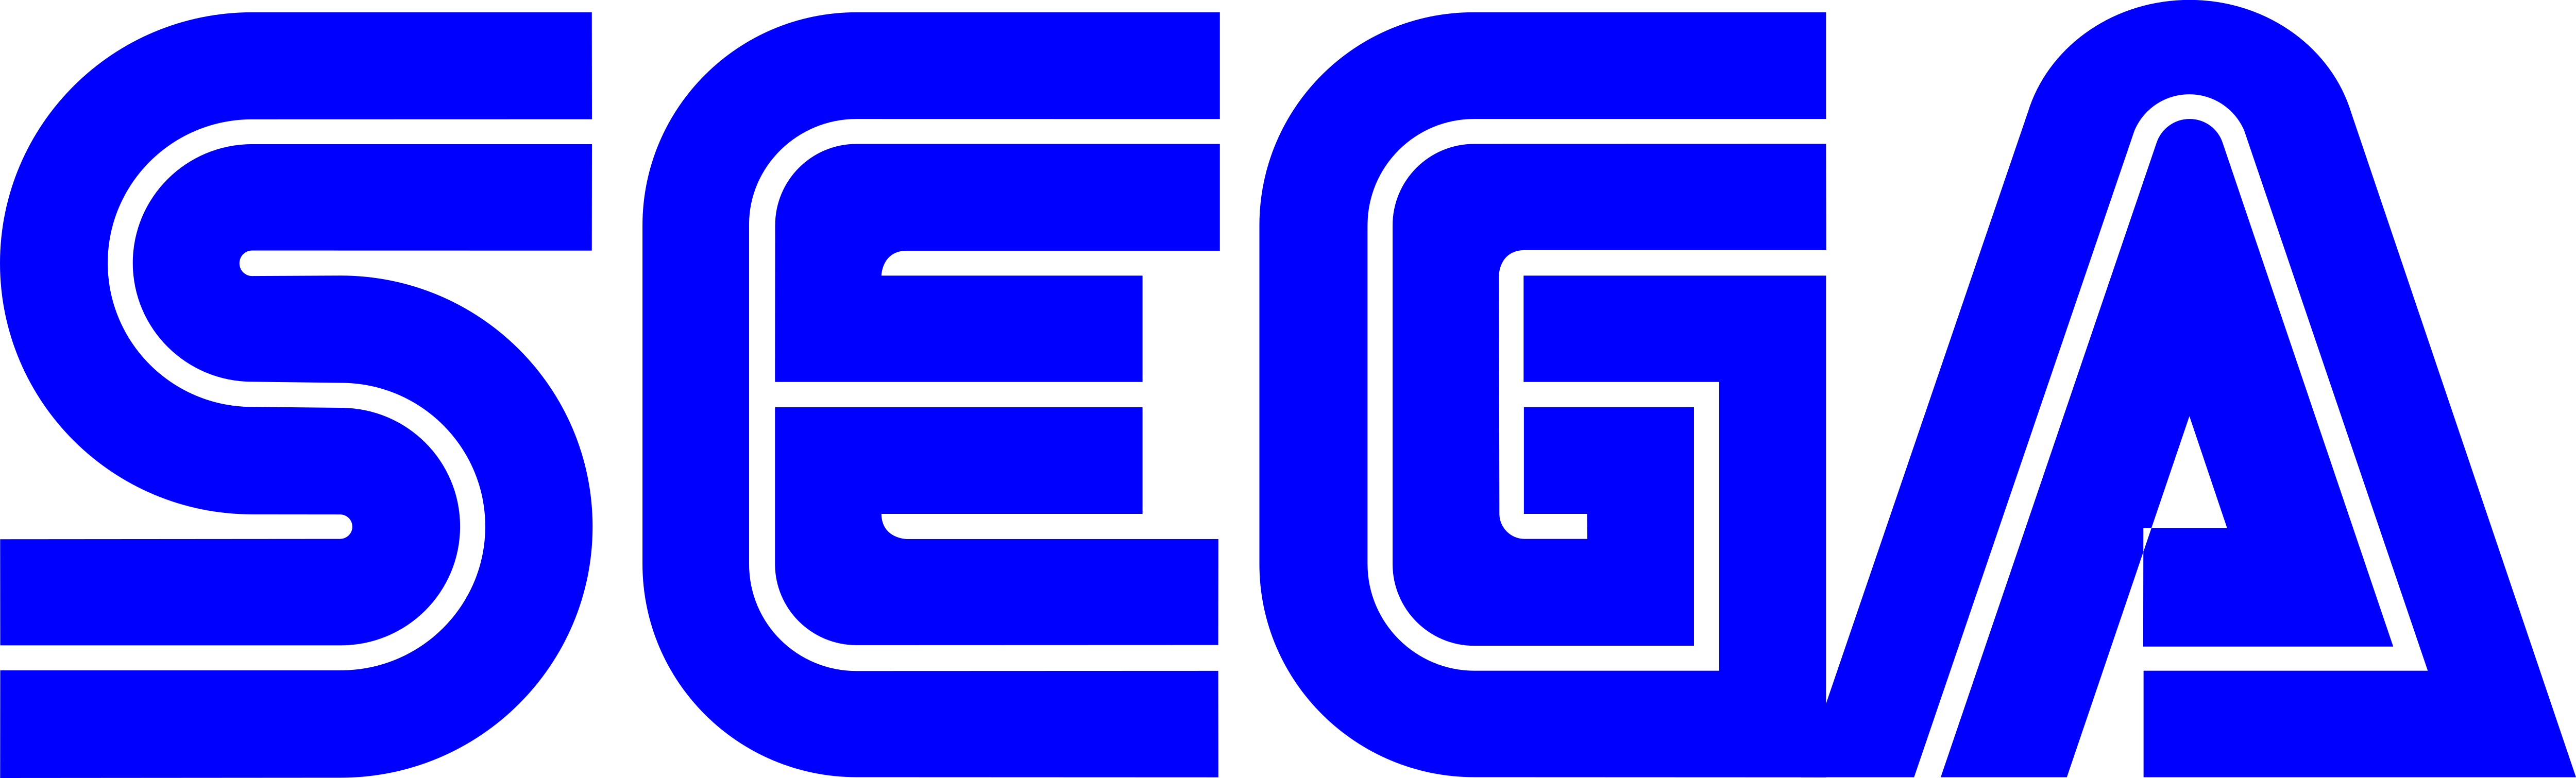 Sega Logo PNG - 176051